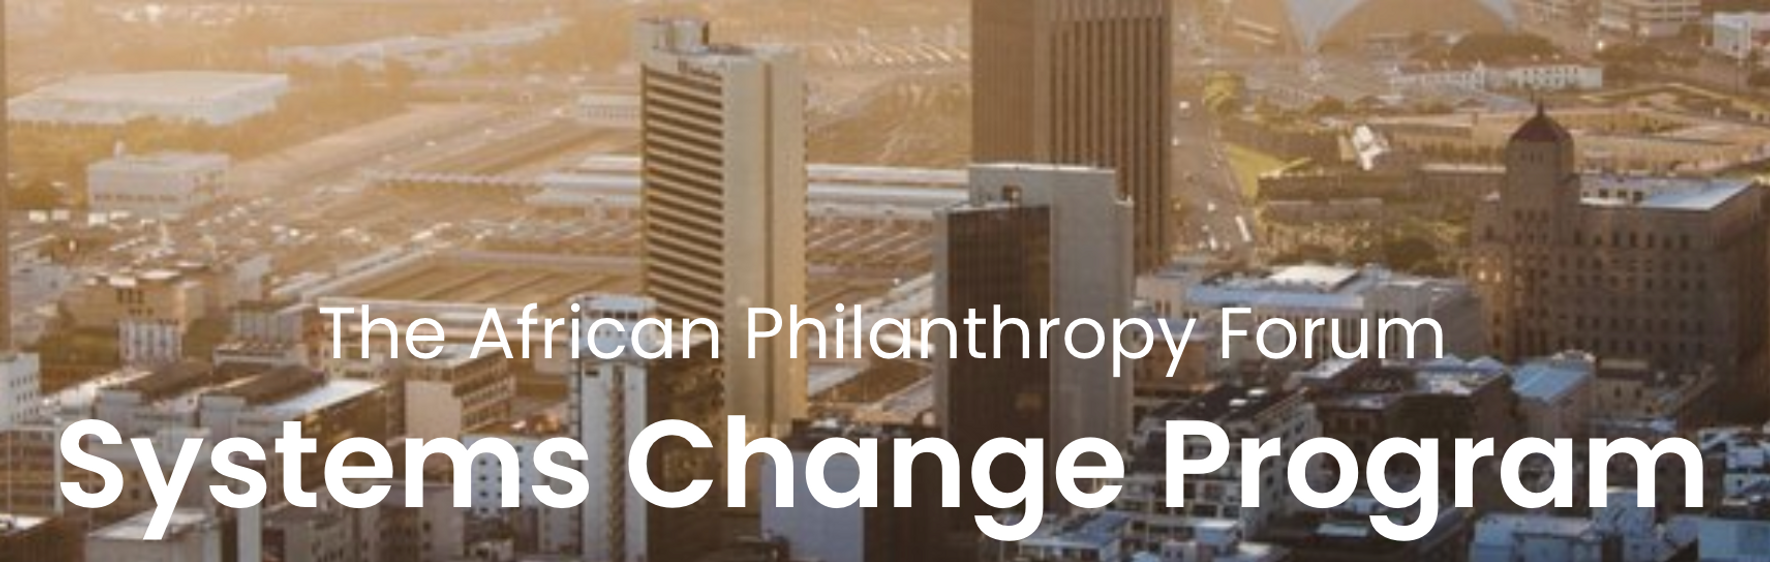 african philanthropy